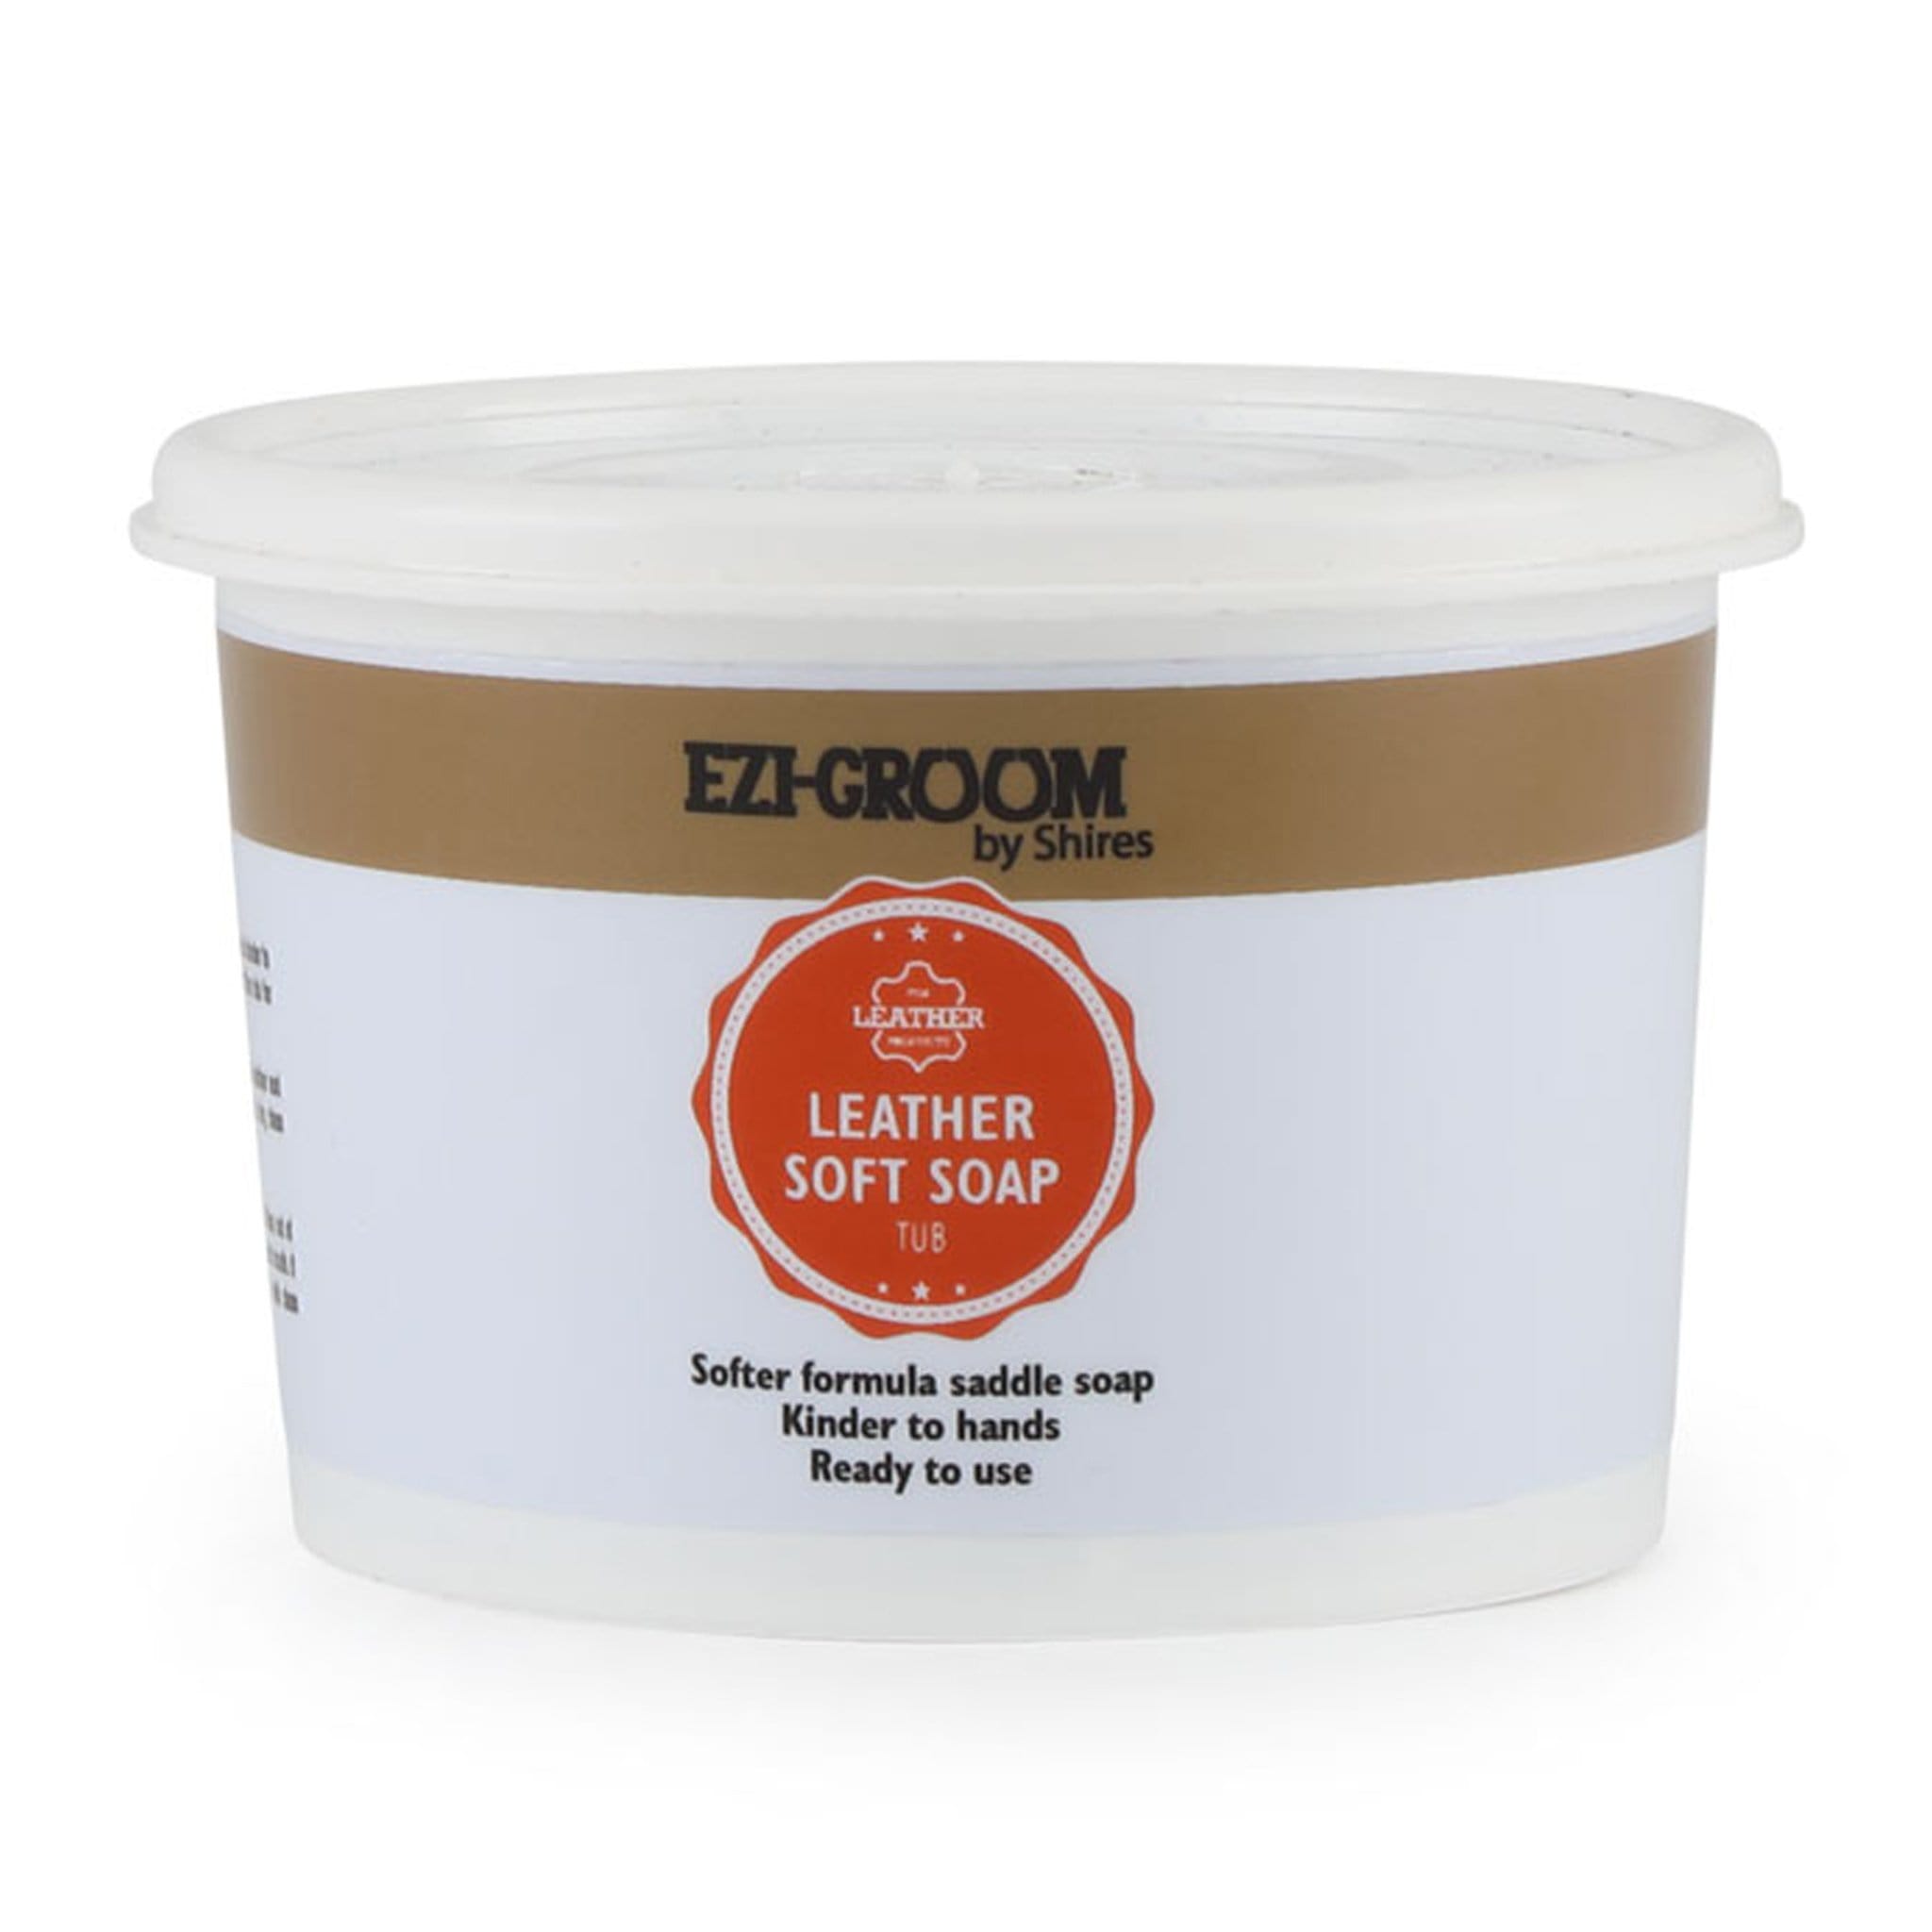 Shires EZI-GROOM Leather Soft Soap Tub 7416 450g